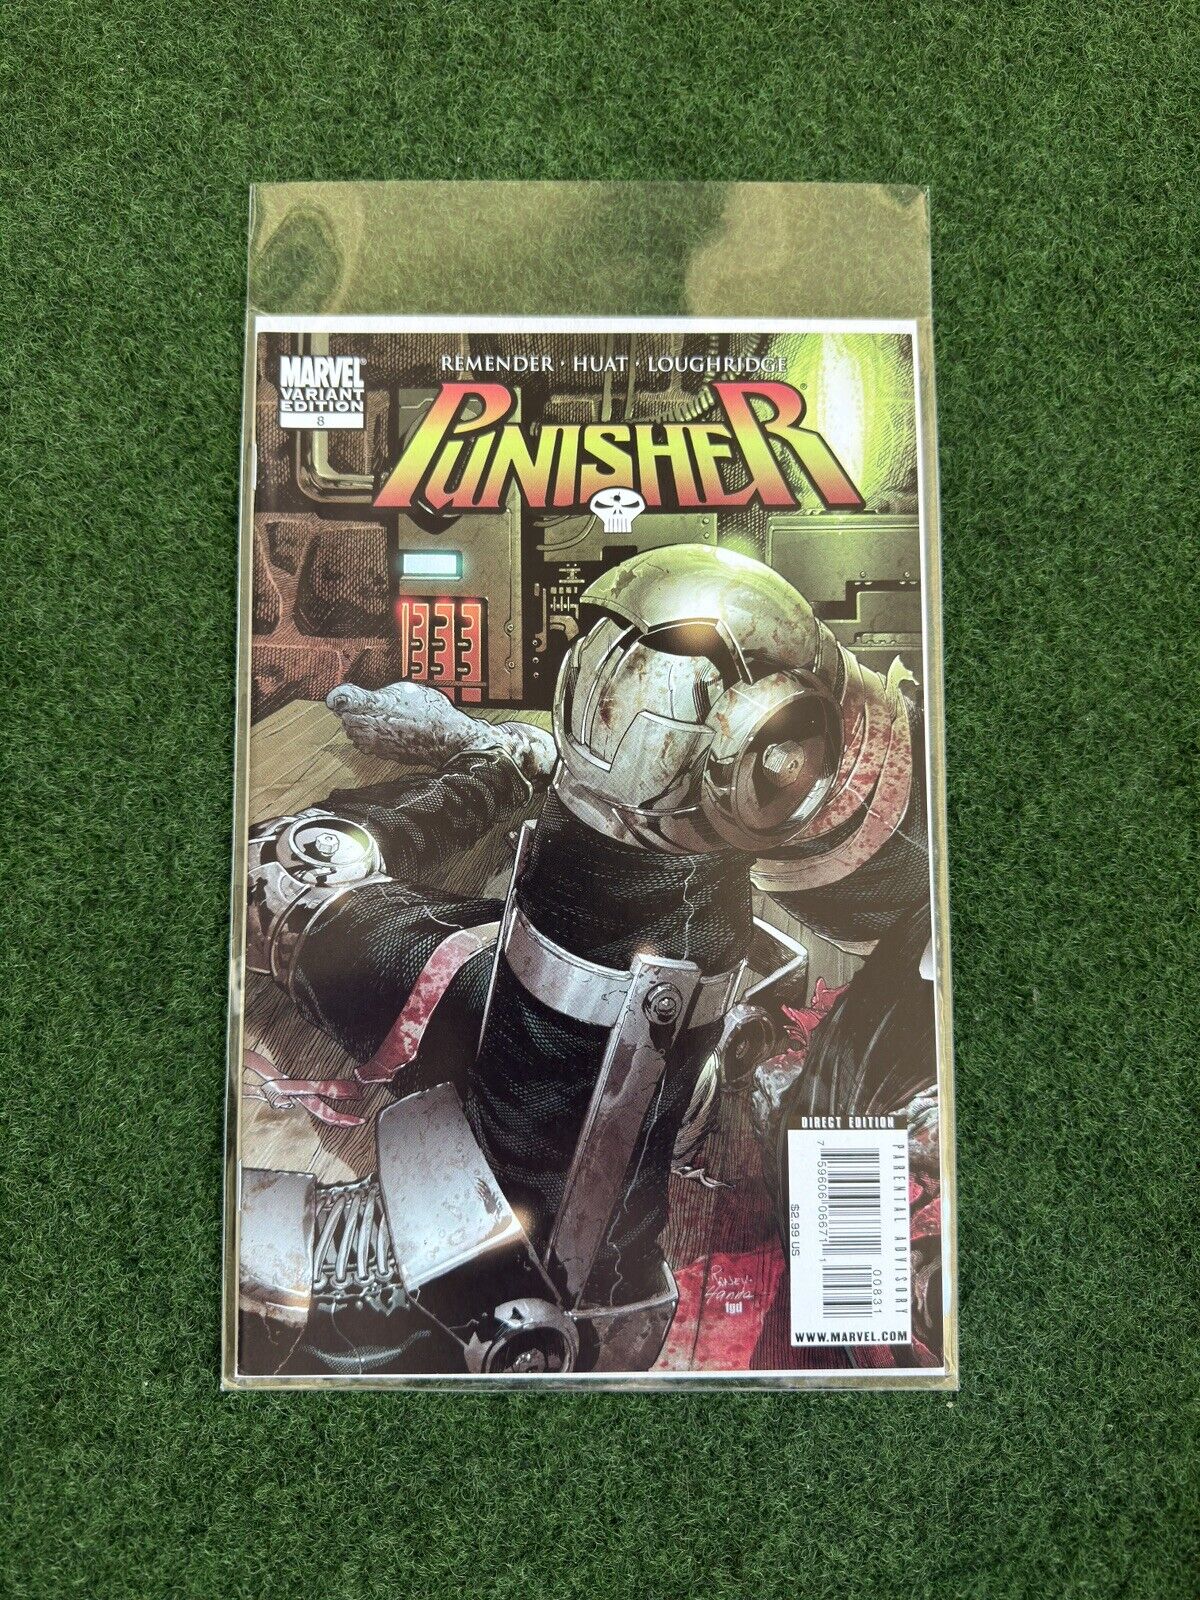 Punisher #8 Tom Raney 1:15 Rare Variant Marvel 2009 “Rest In Pieces” Variant